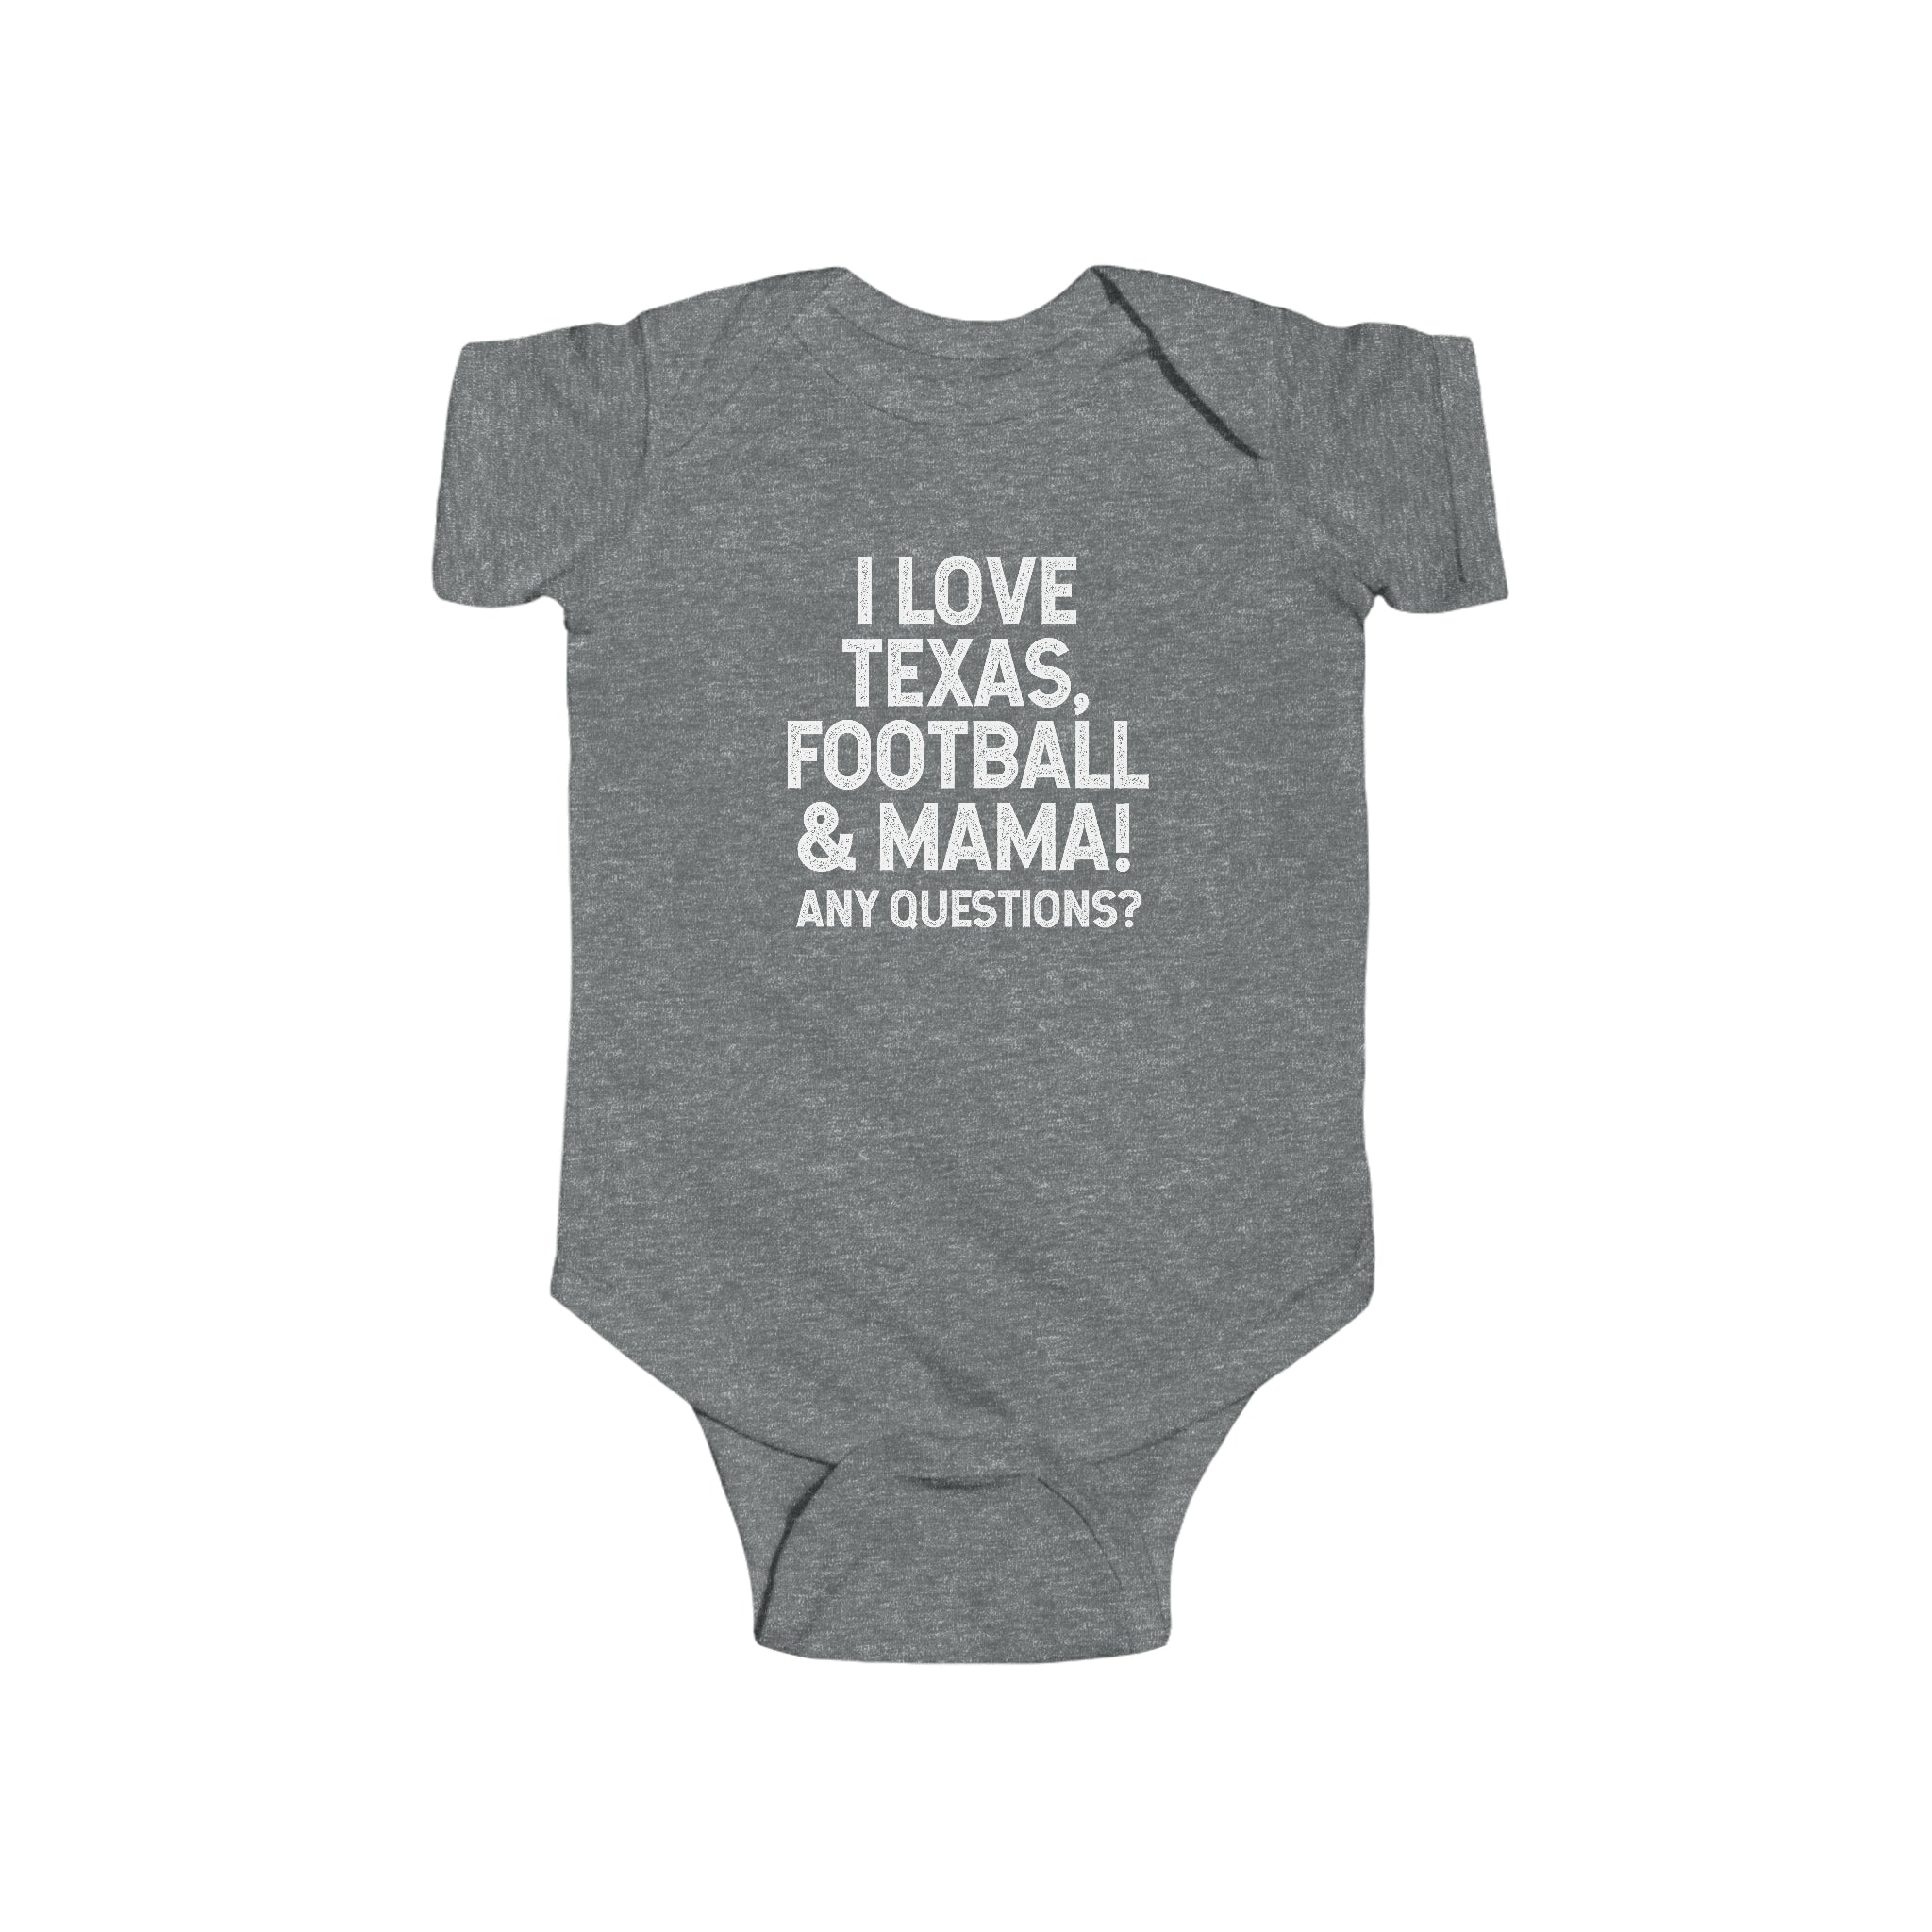 I Love Texas, Football & Mama Onesie